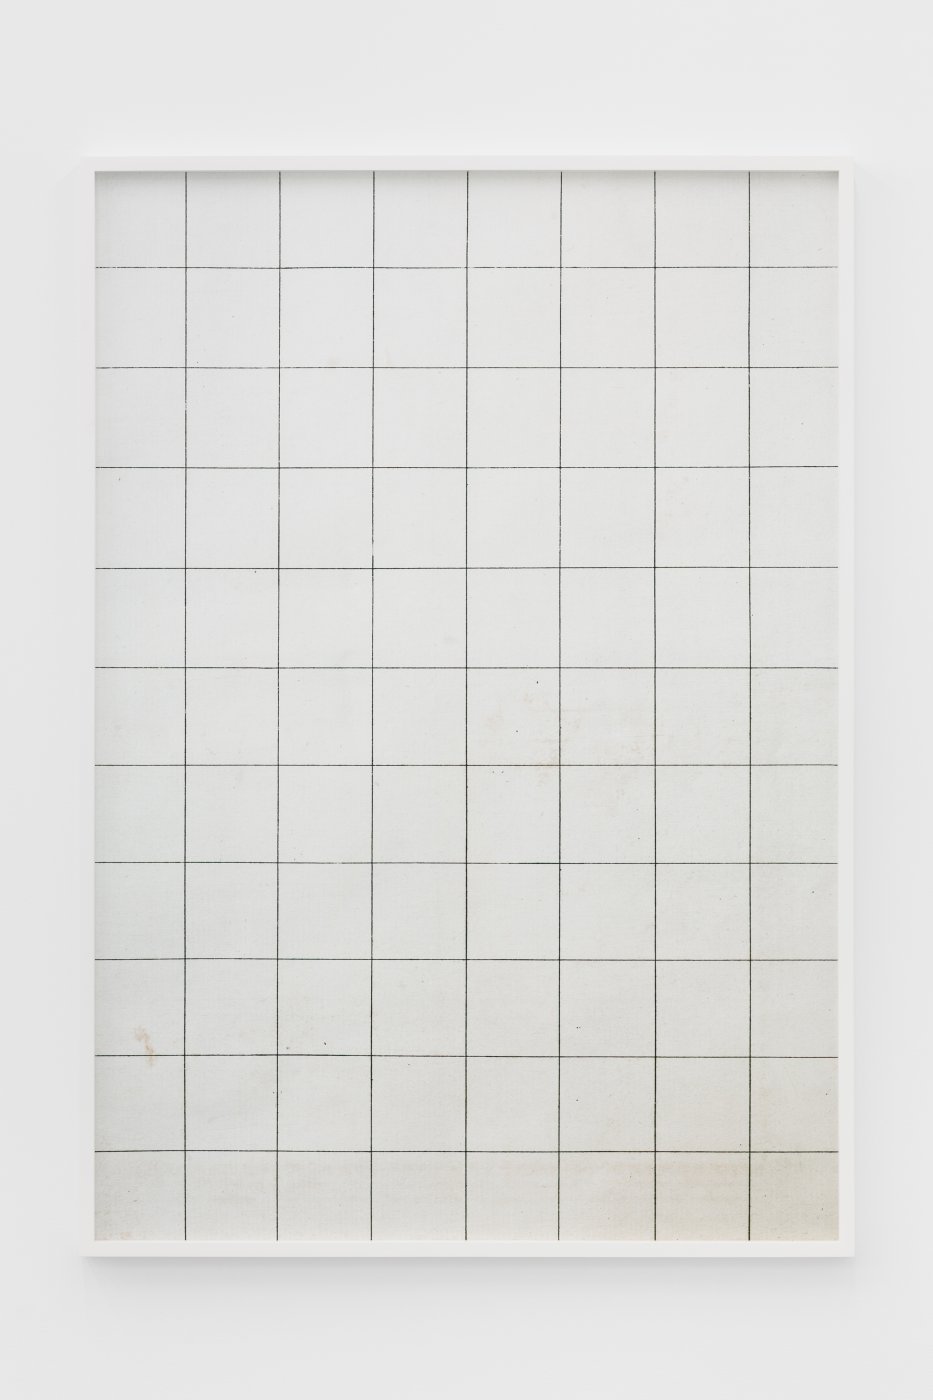 Daniel Gustav Cramer, Untitled (Mare) III, 2017. C-print framed.
151 × 106 cm
